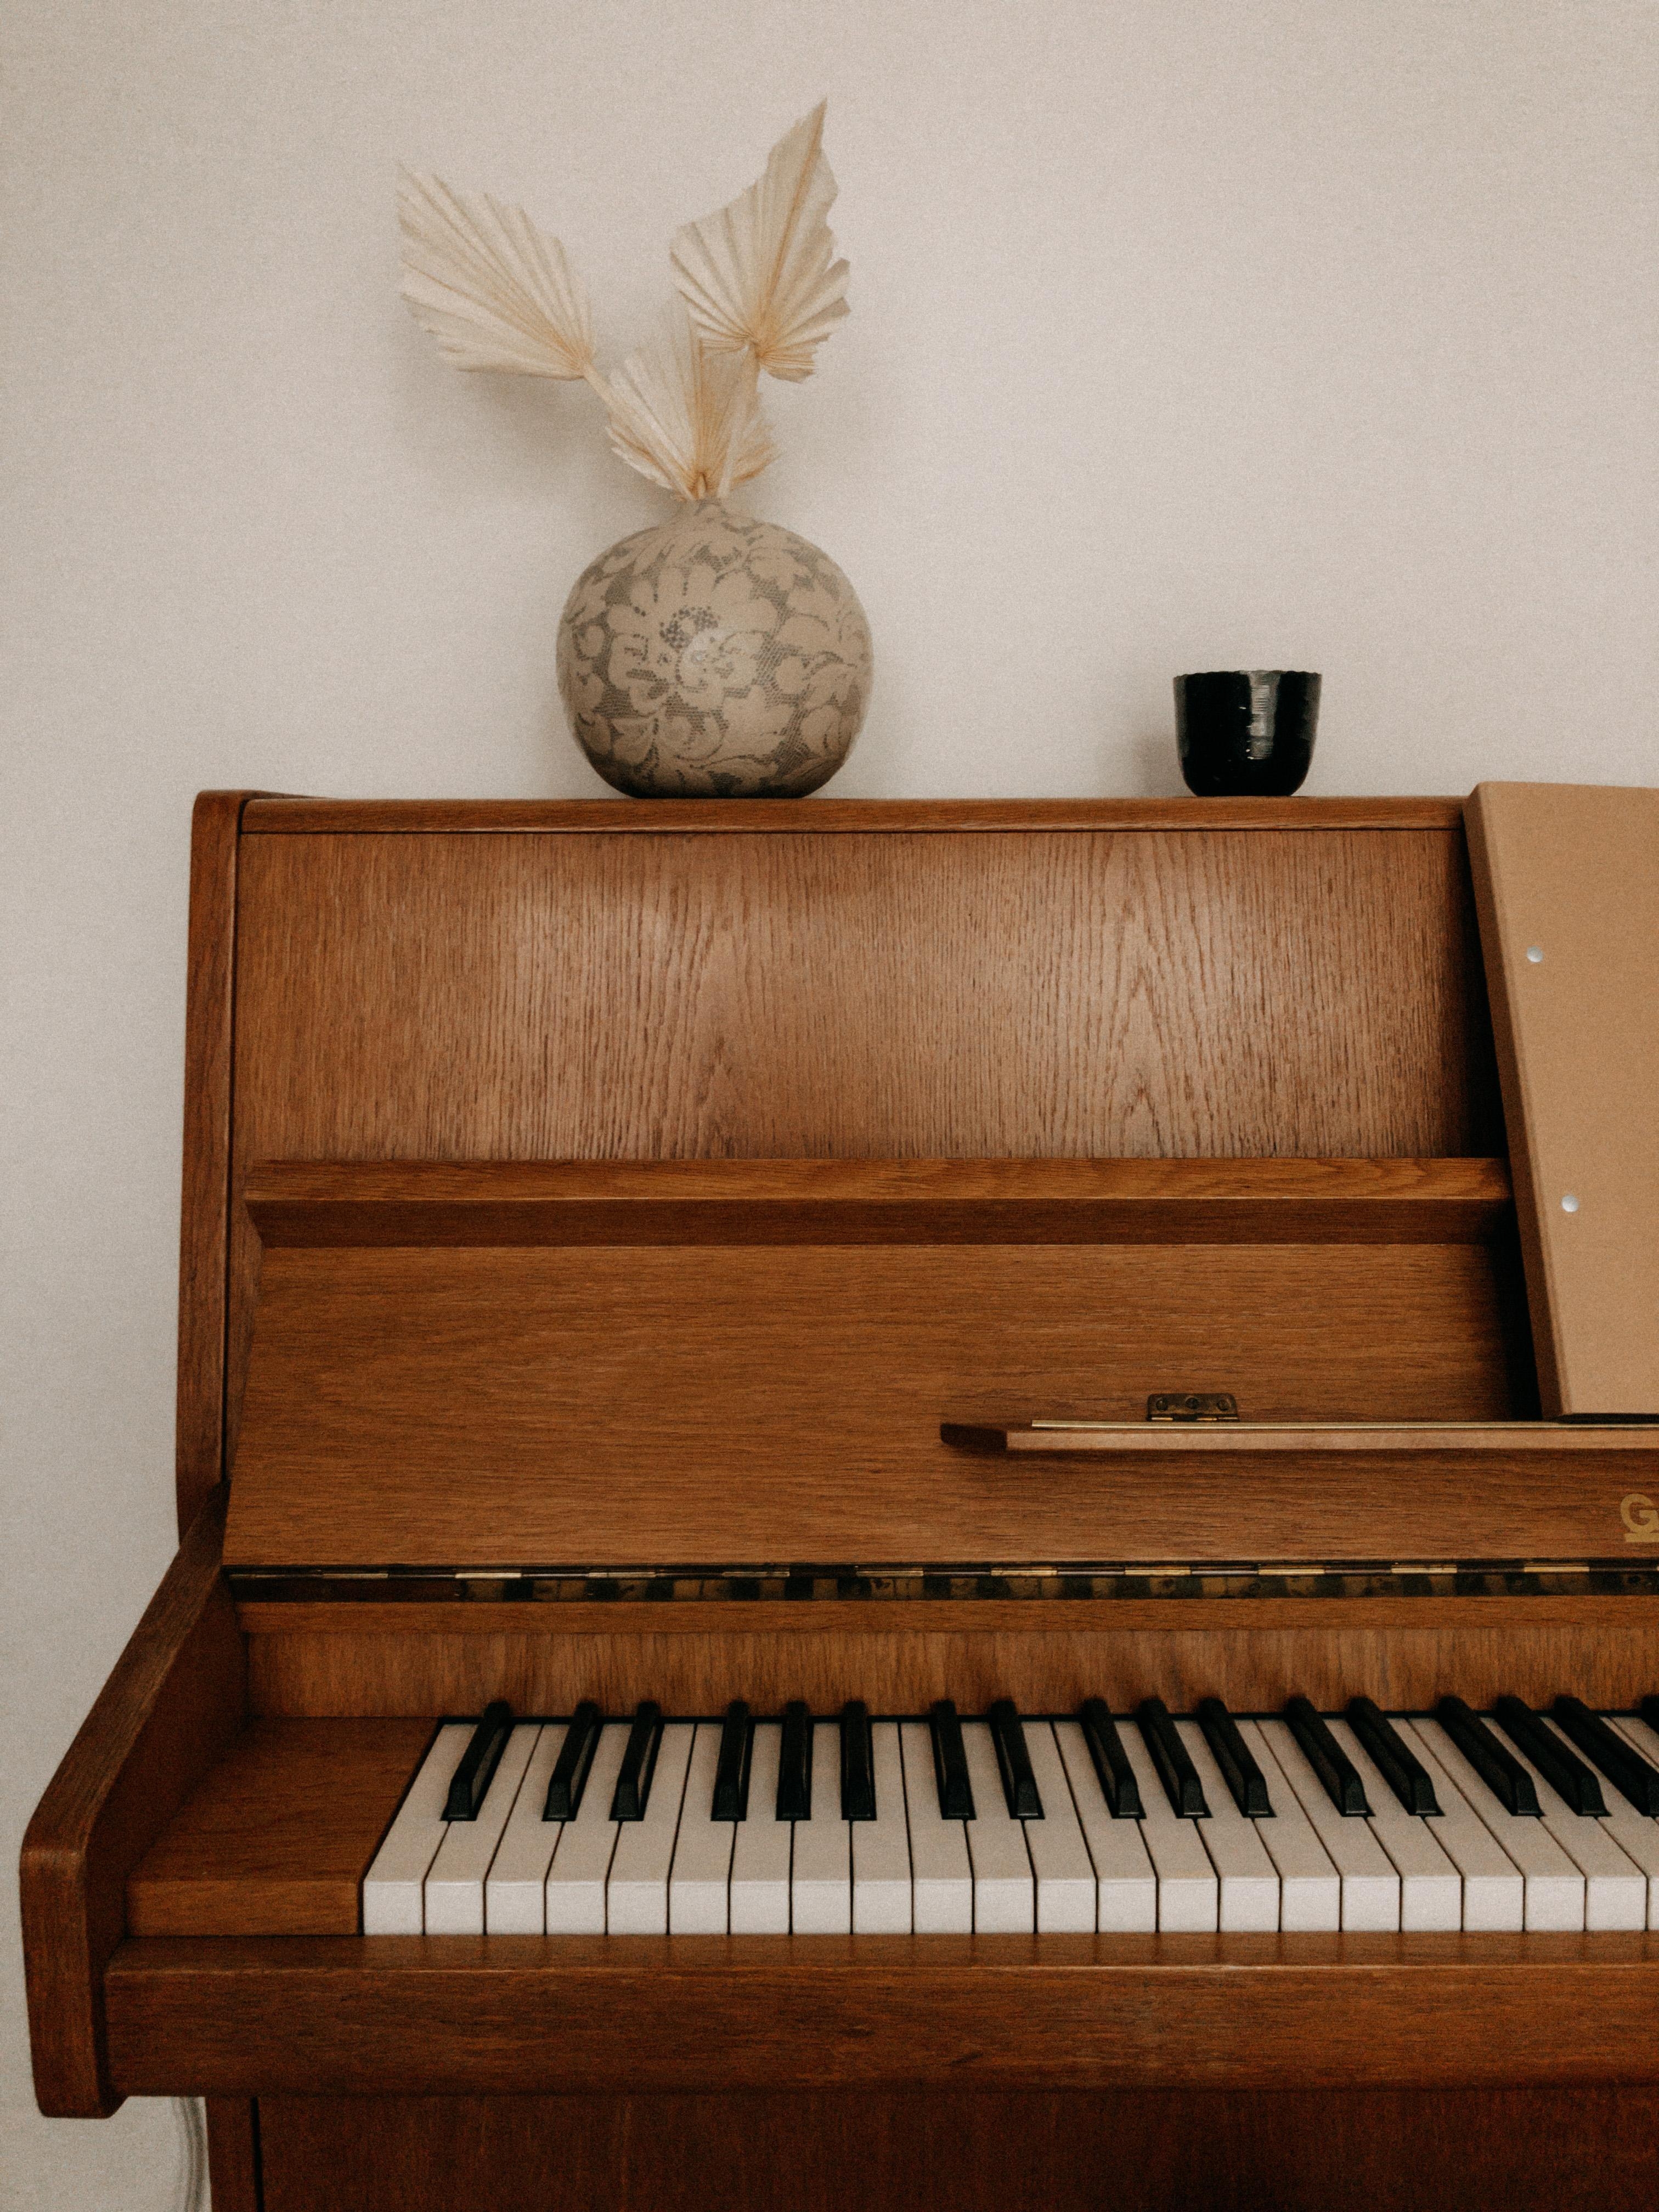 Music was my first love.
#piano #klavier #deko #trockenblumen #vase